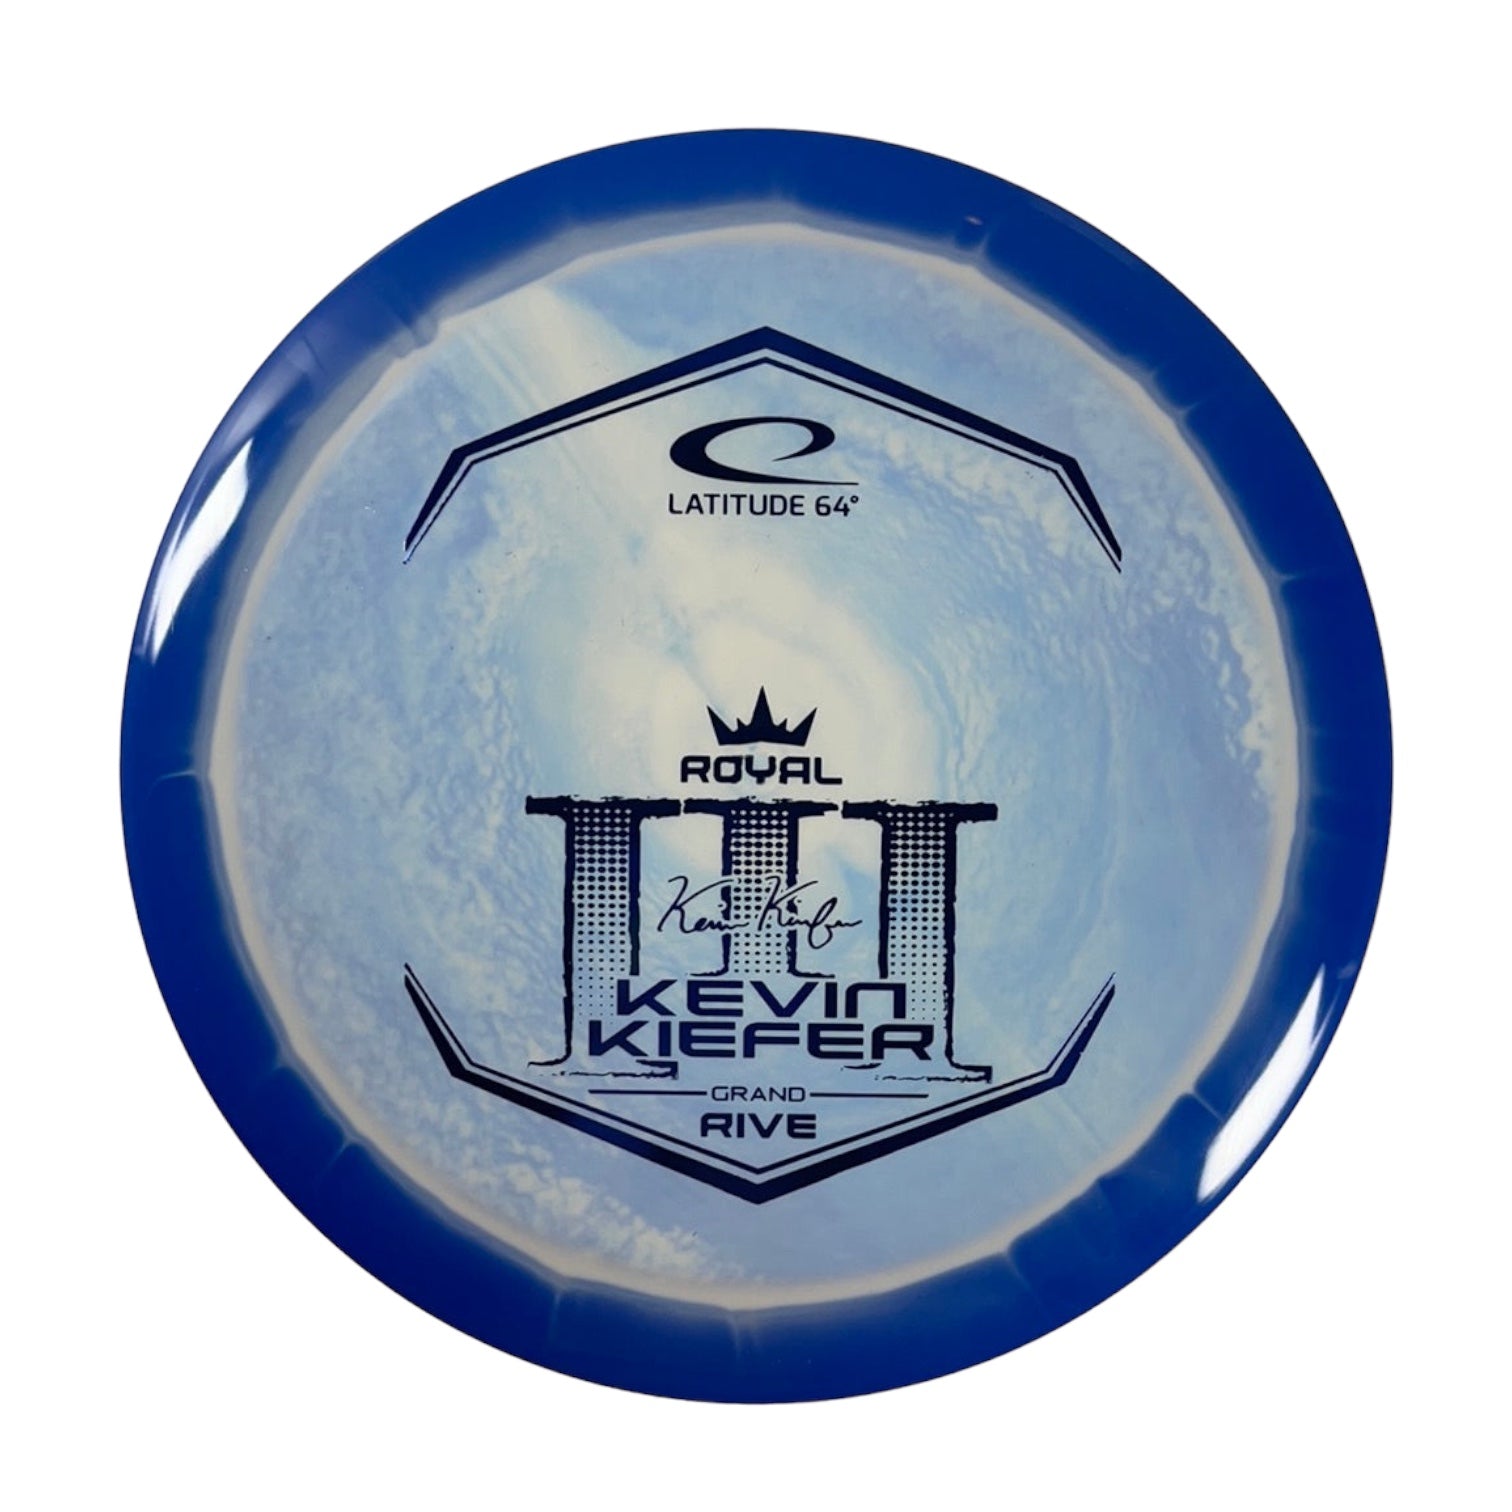 Latitude 64 Rive | Royal Grand Orbit | Blue/Blue 173-174g (Kevin Kiefer) Disc Golf